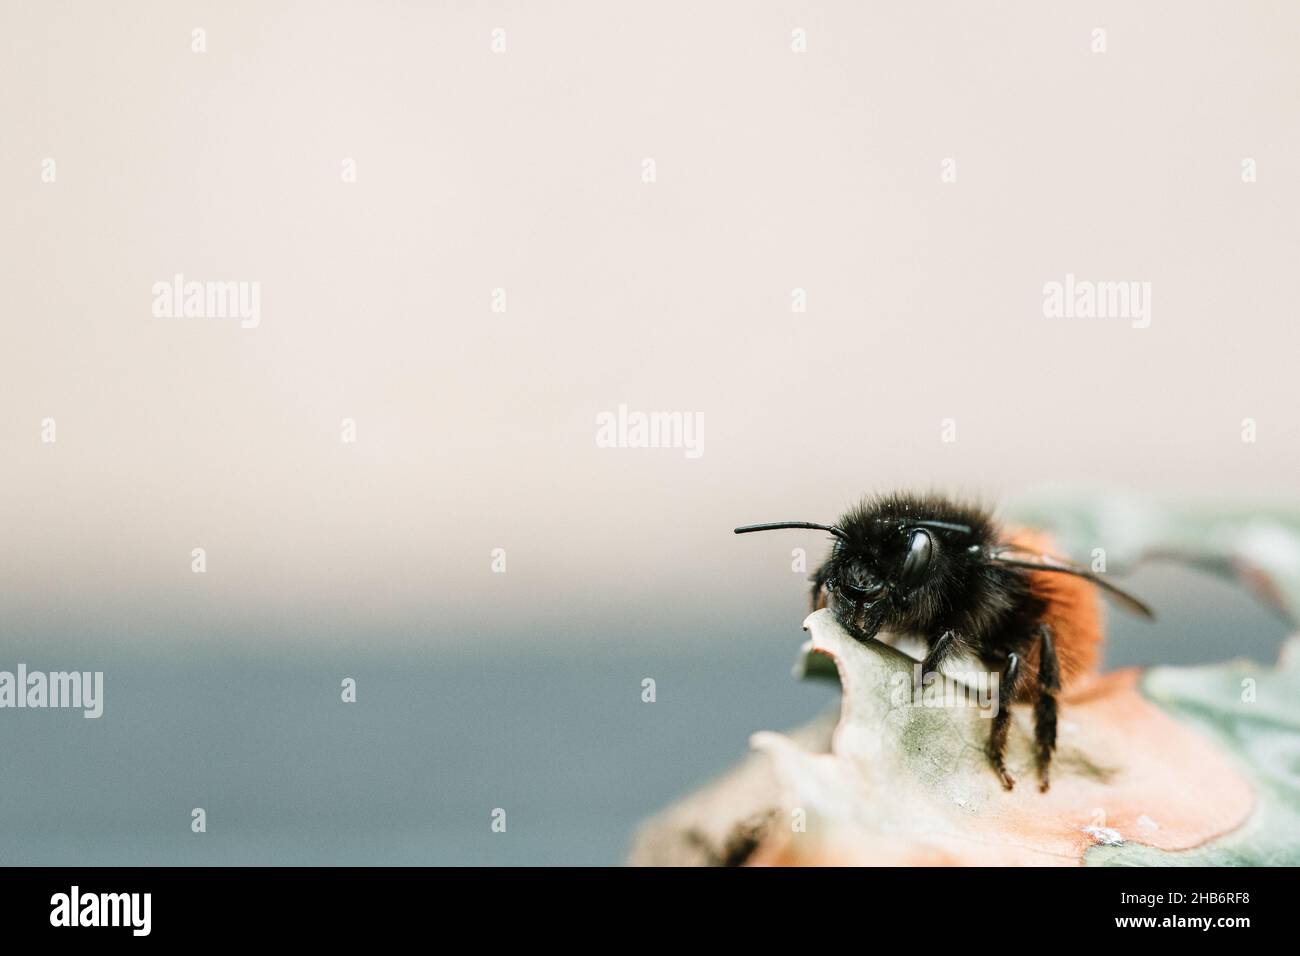 Hummel / Bumbel bee Stock Photo